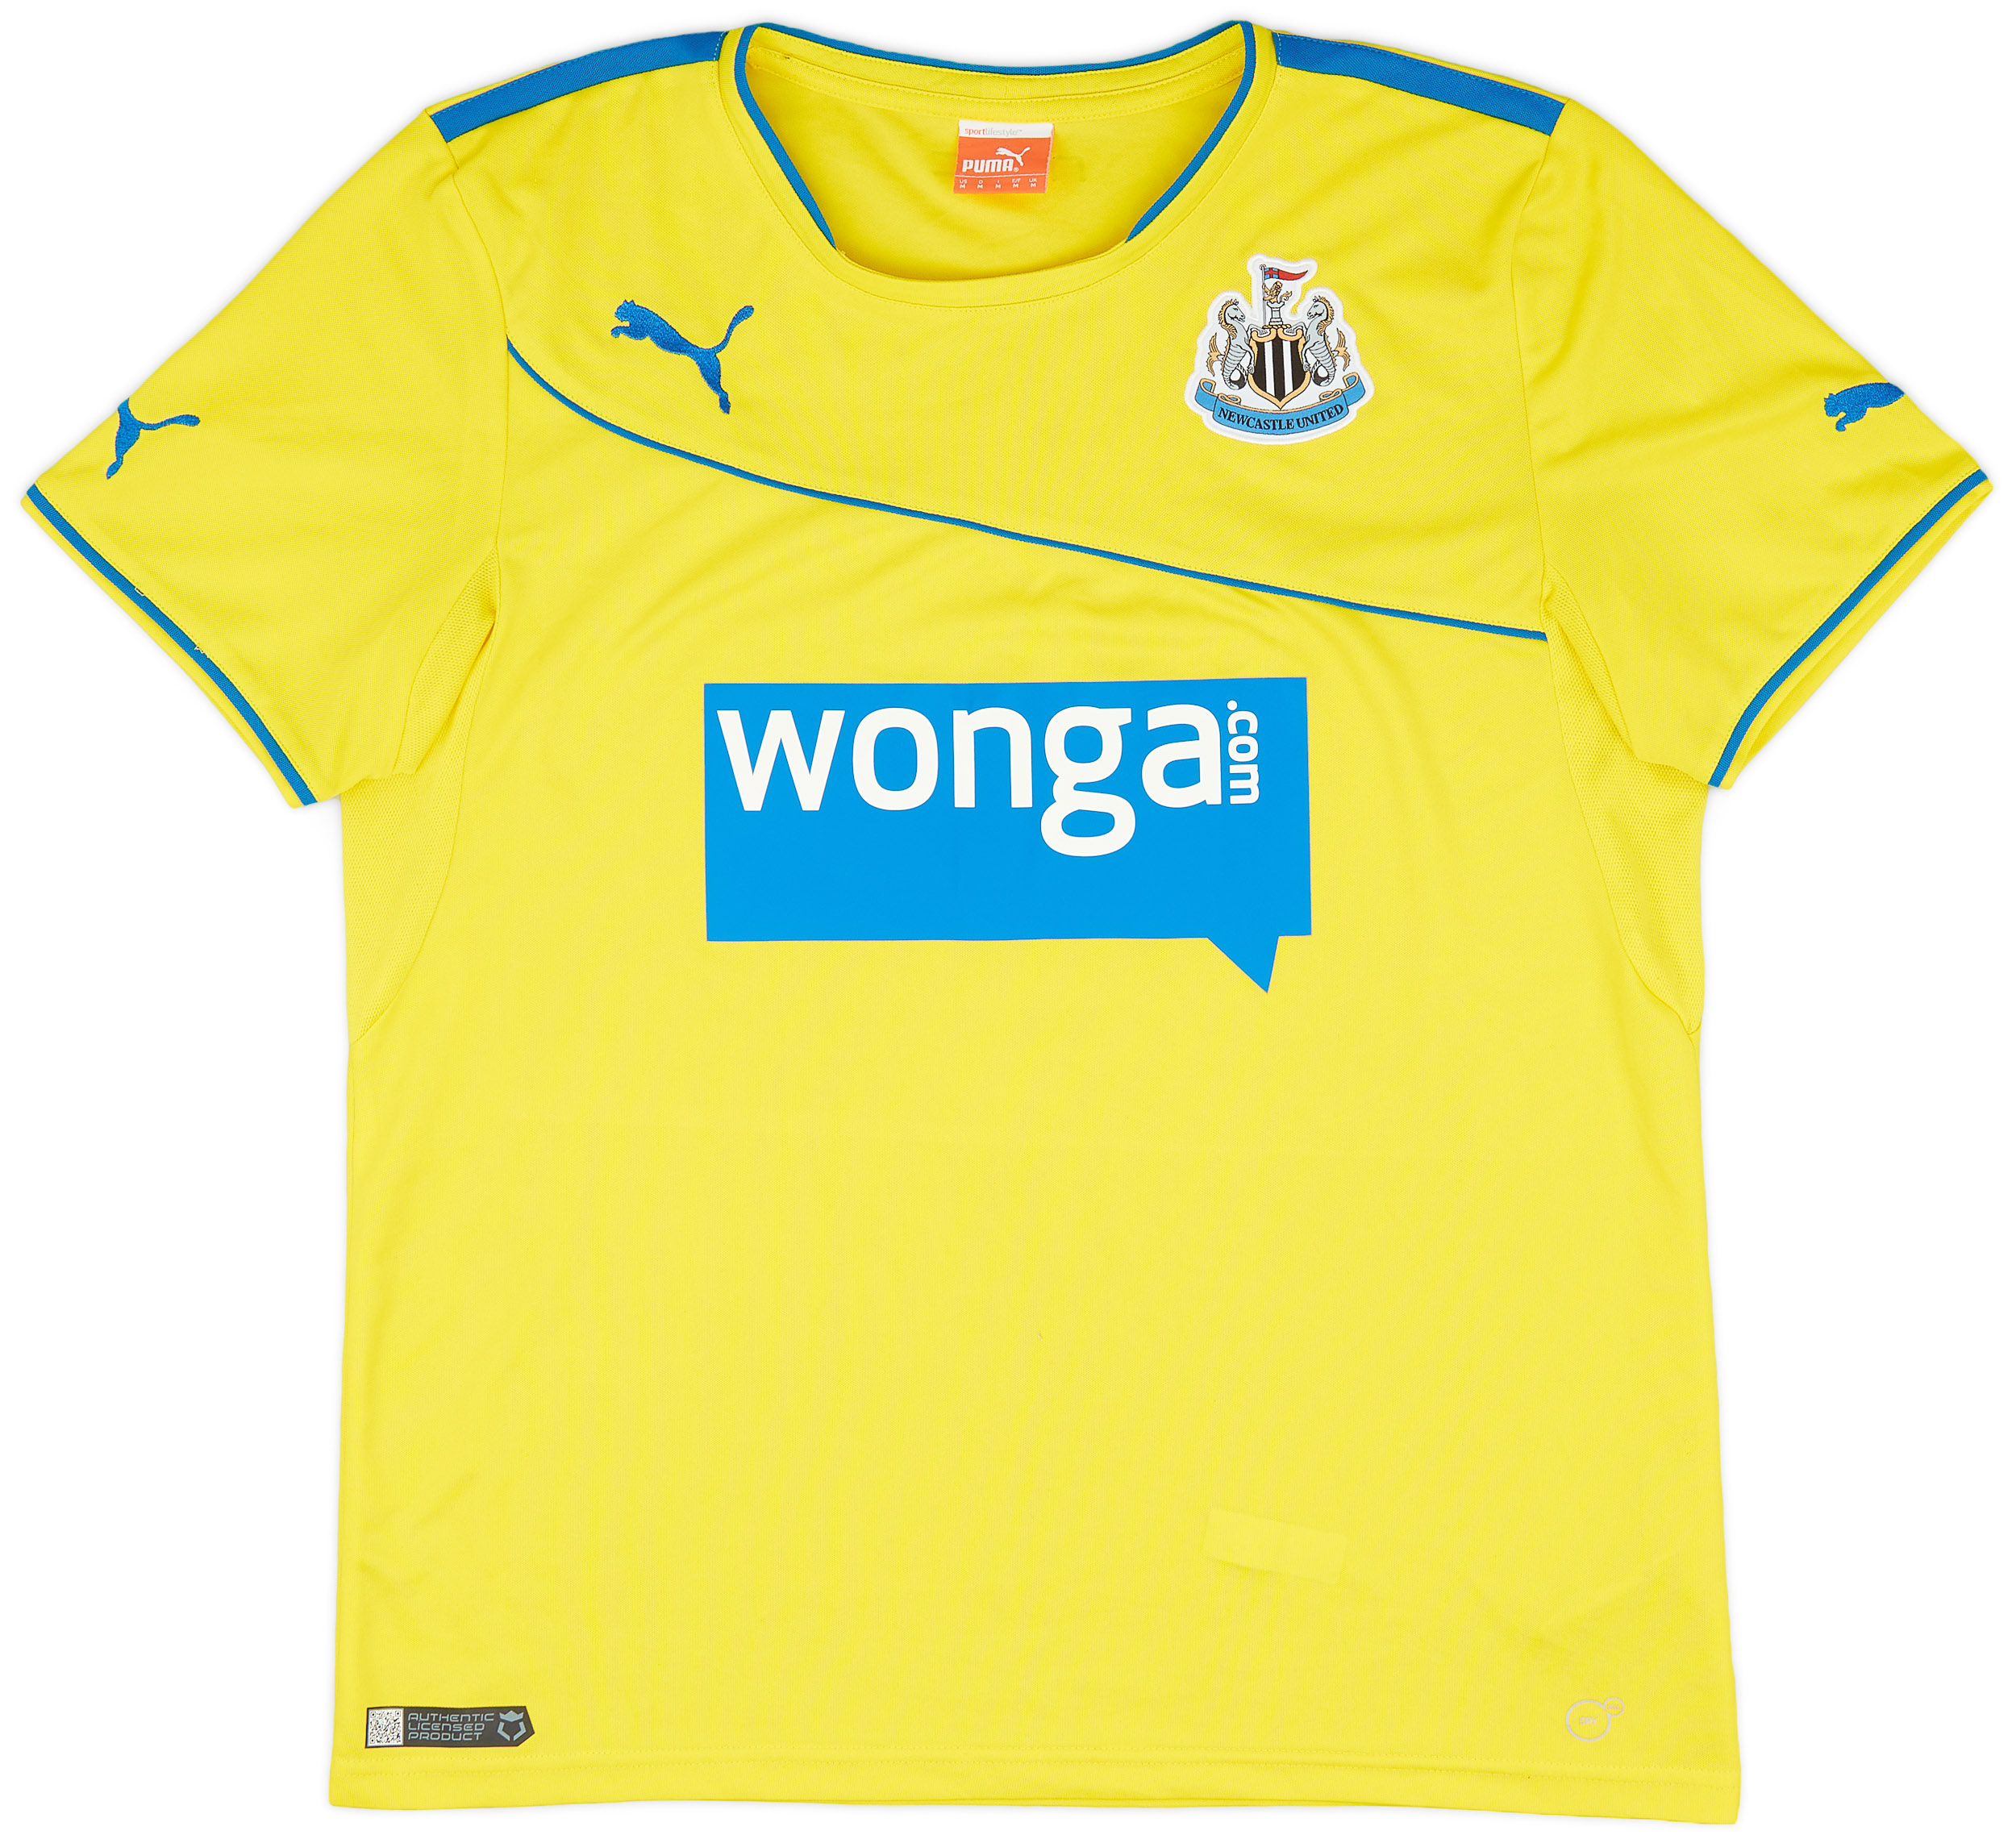 2013-14 Newcastle United Third Shirt - 9/10 - ()